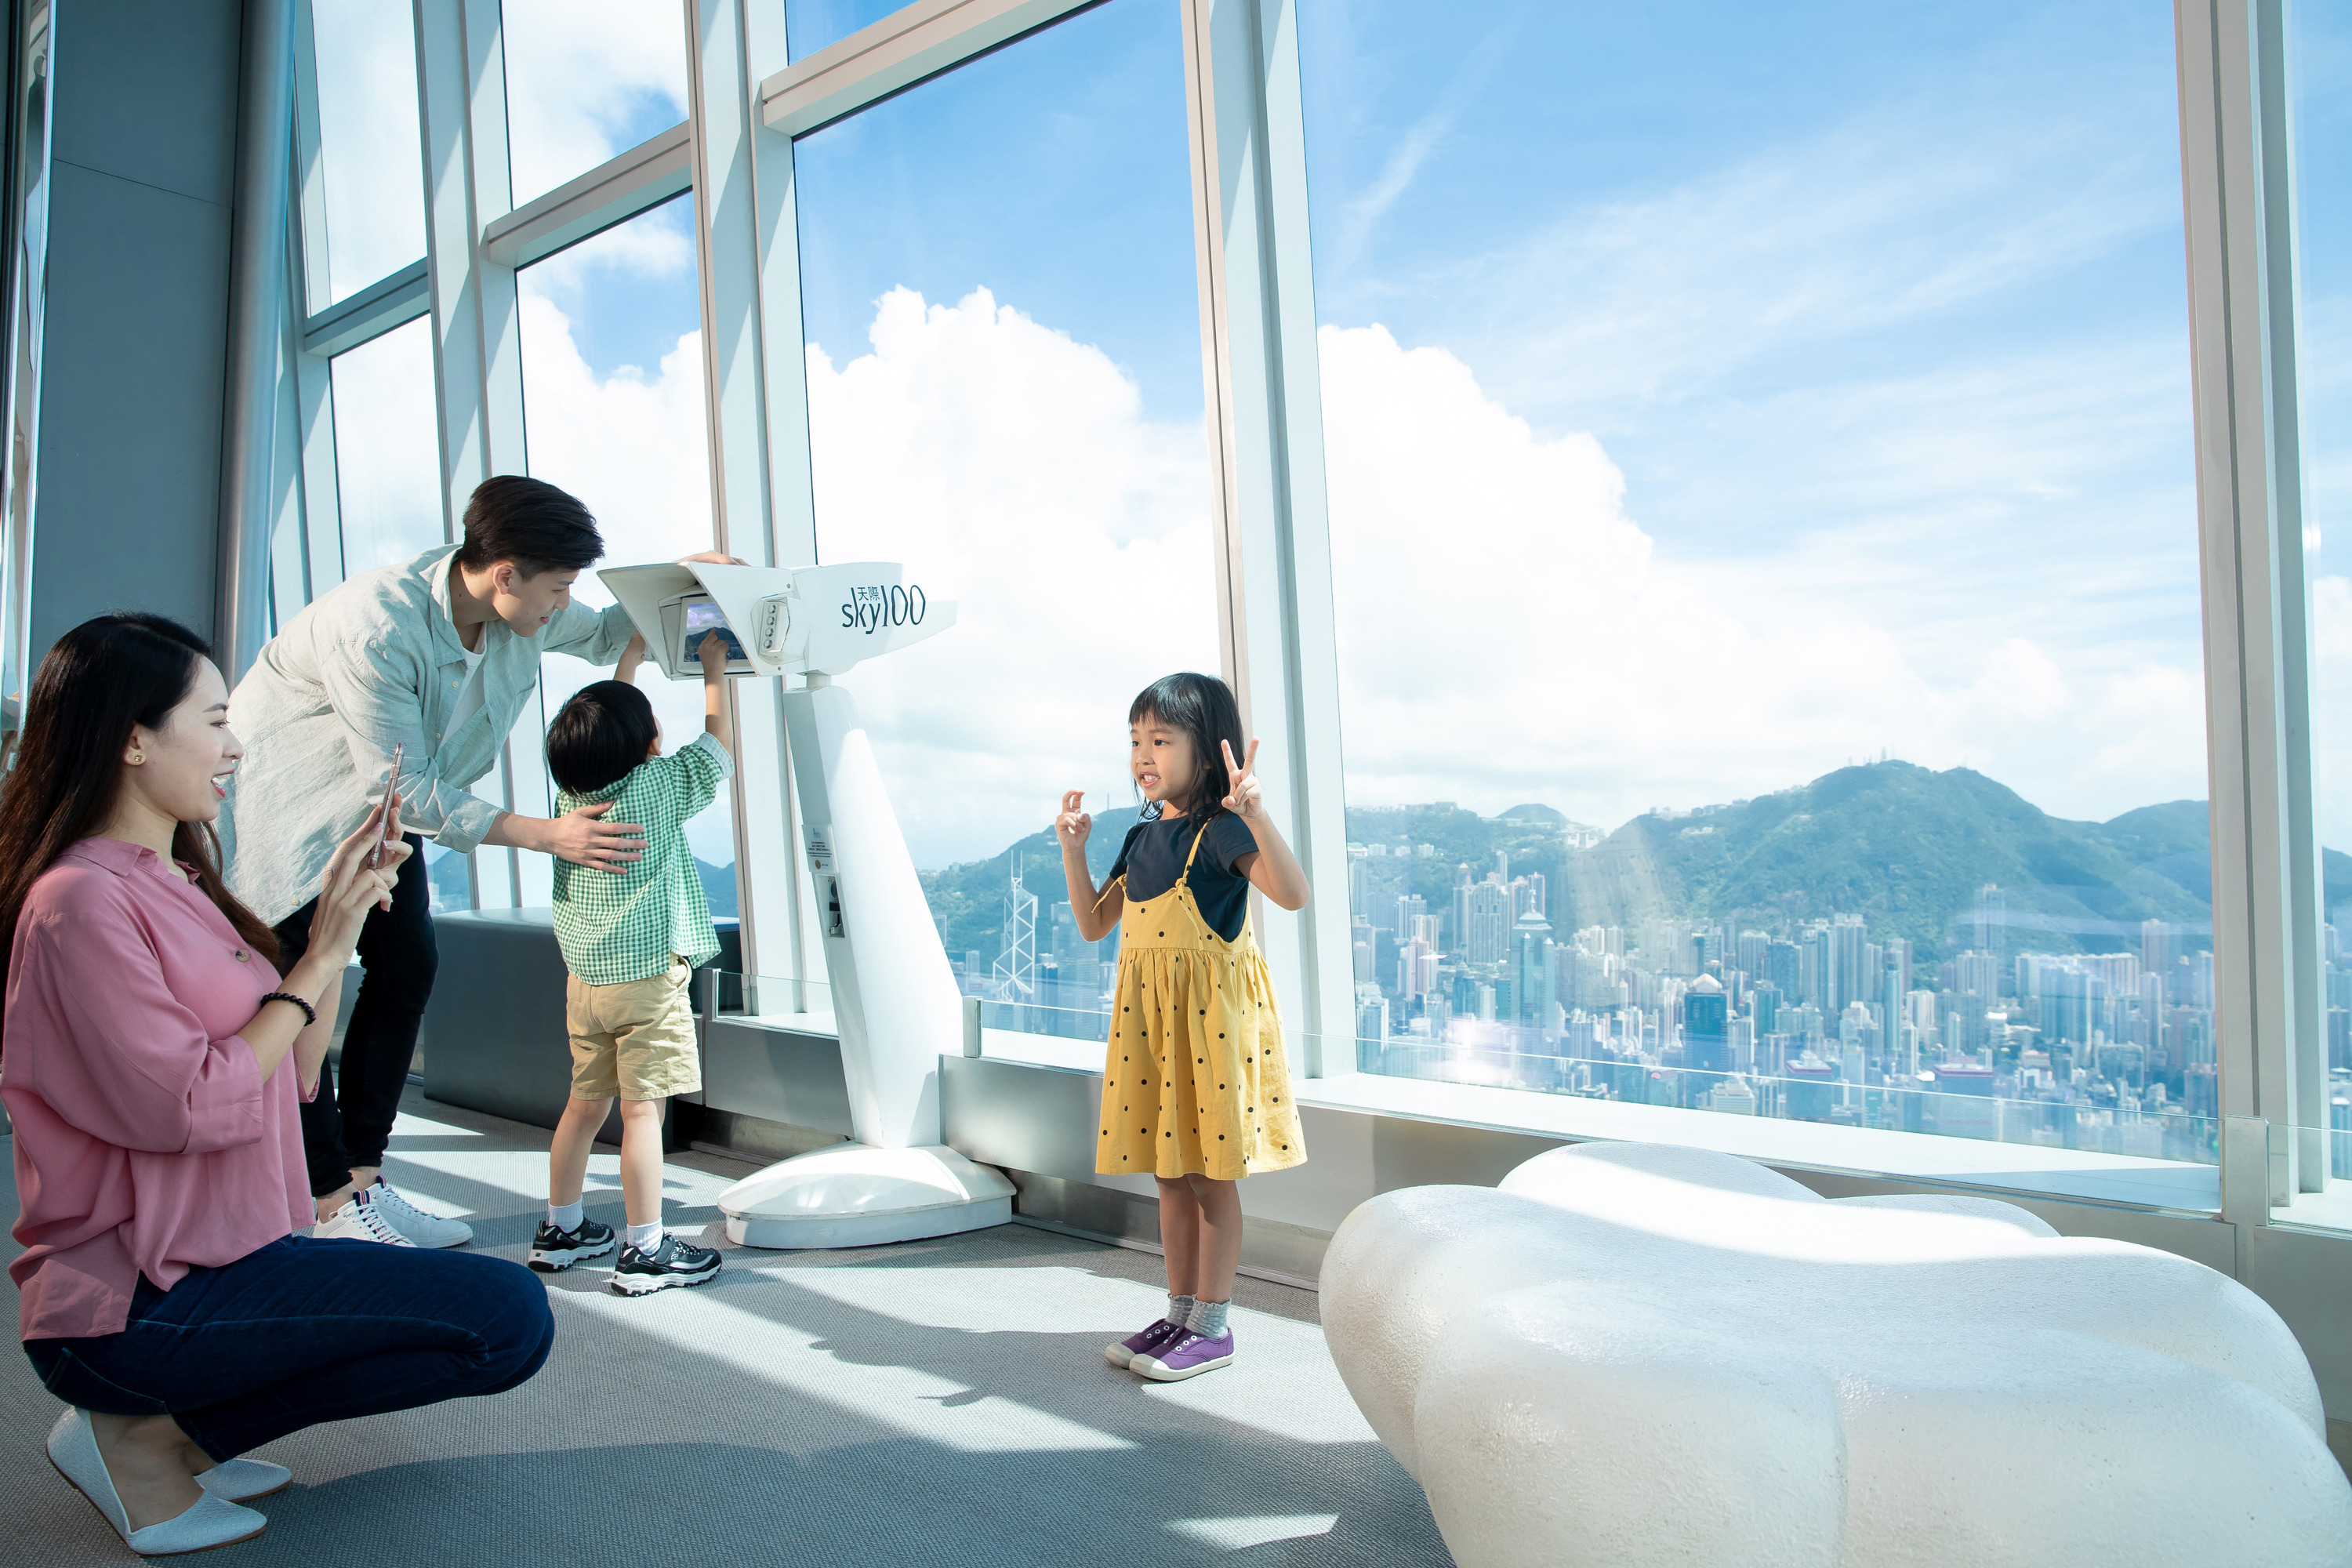 Sky100 Hong Kong Observation Deck Admission Ticket 2023 Hong Kong SAR ...